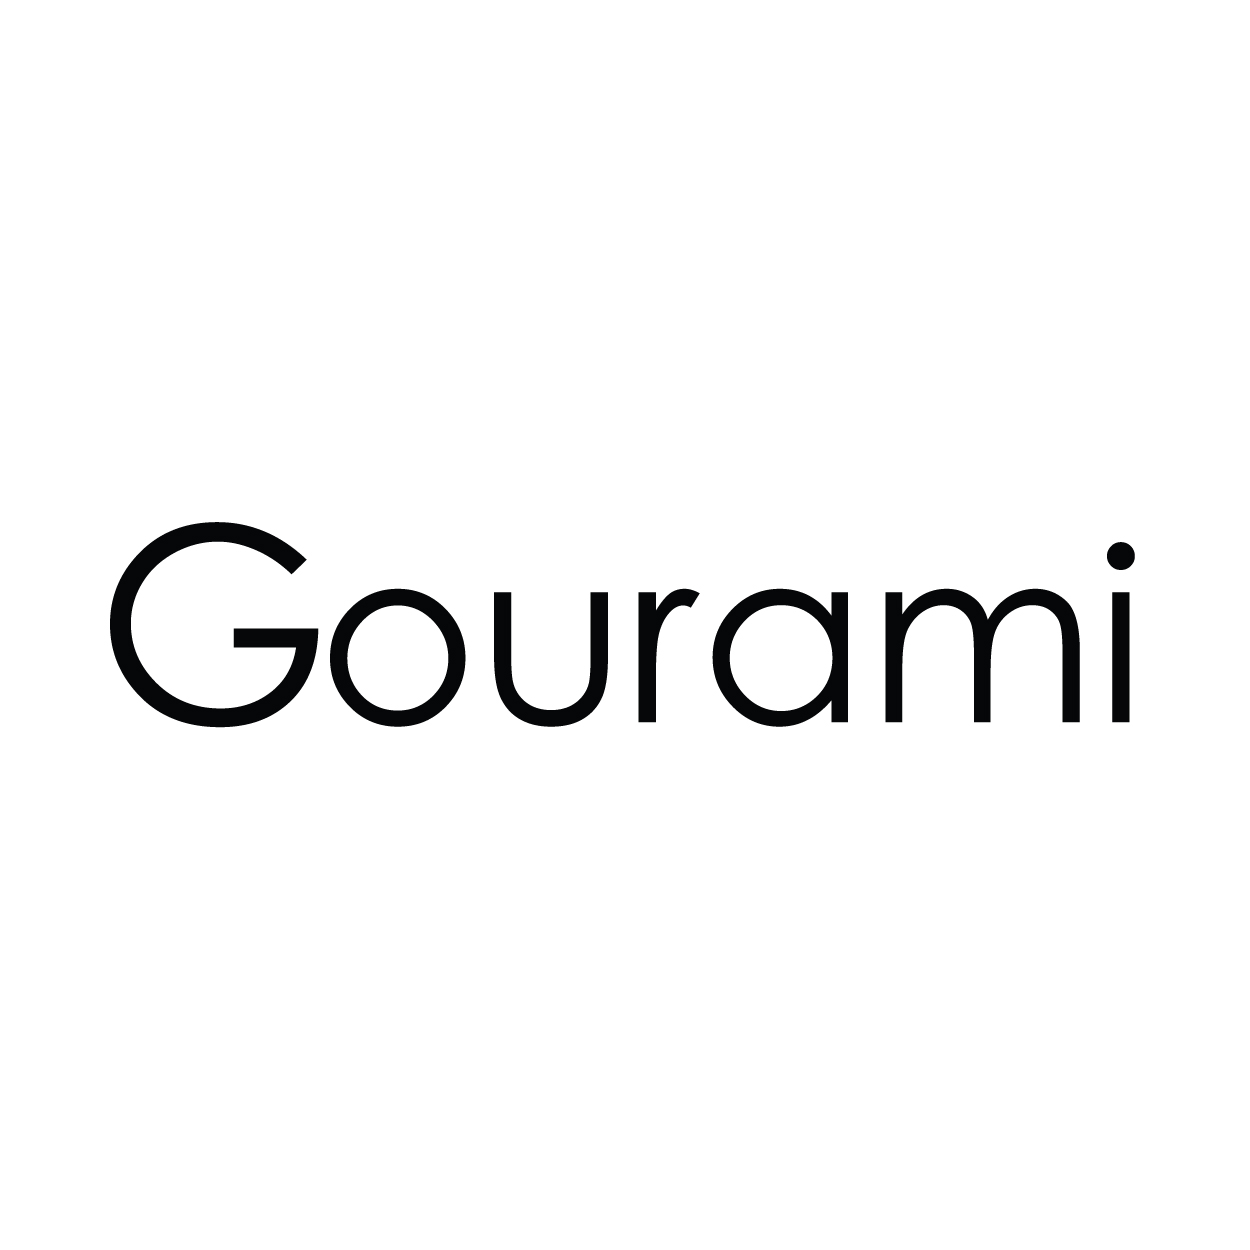 Gourami